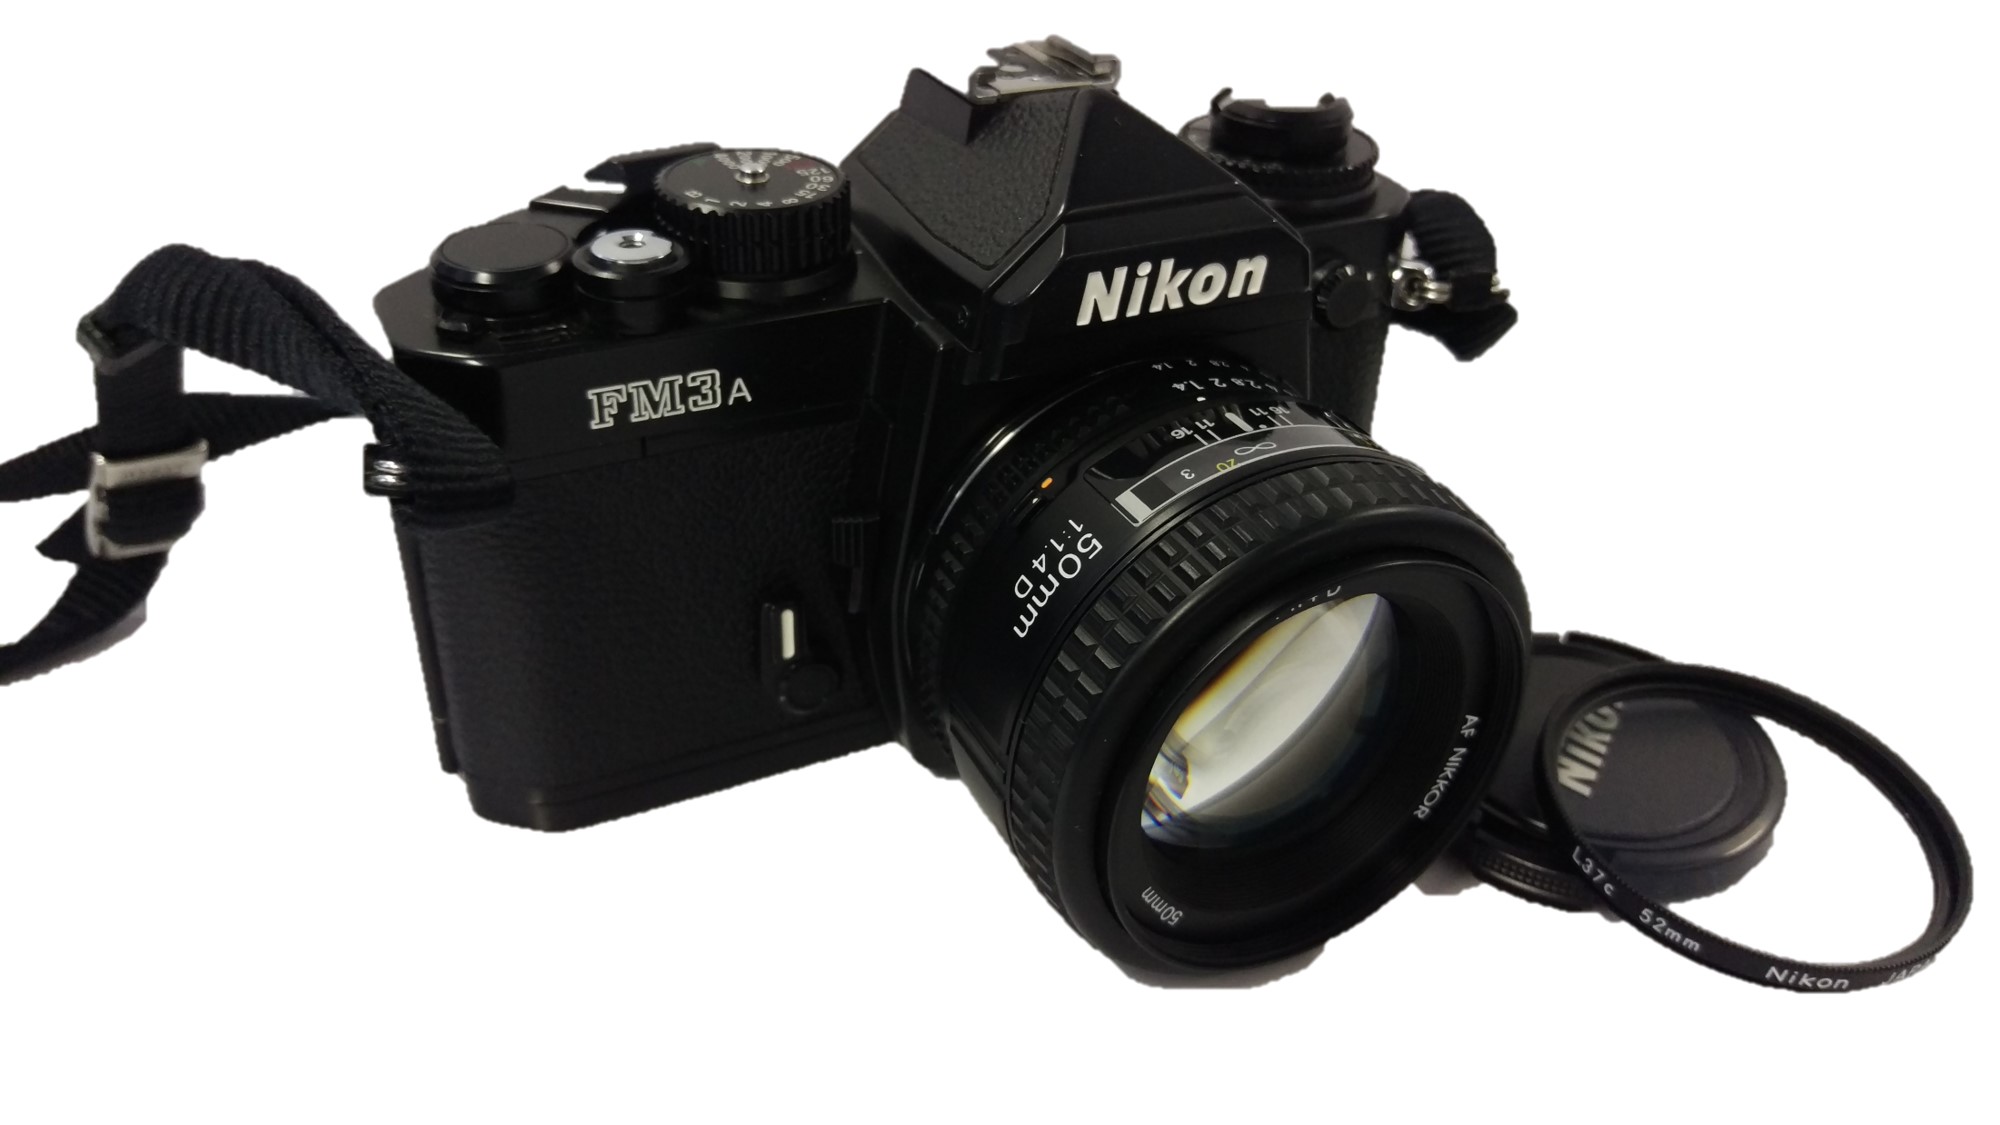 【Nikon:FM3A】のカメラ出張買取実績